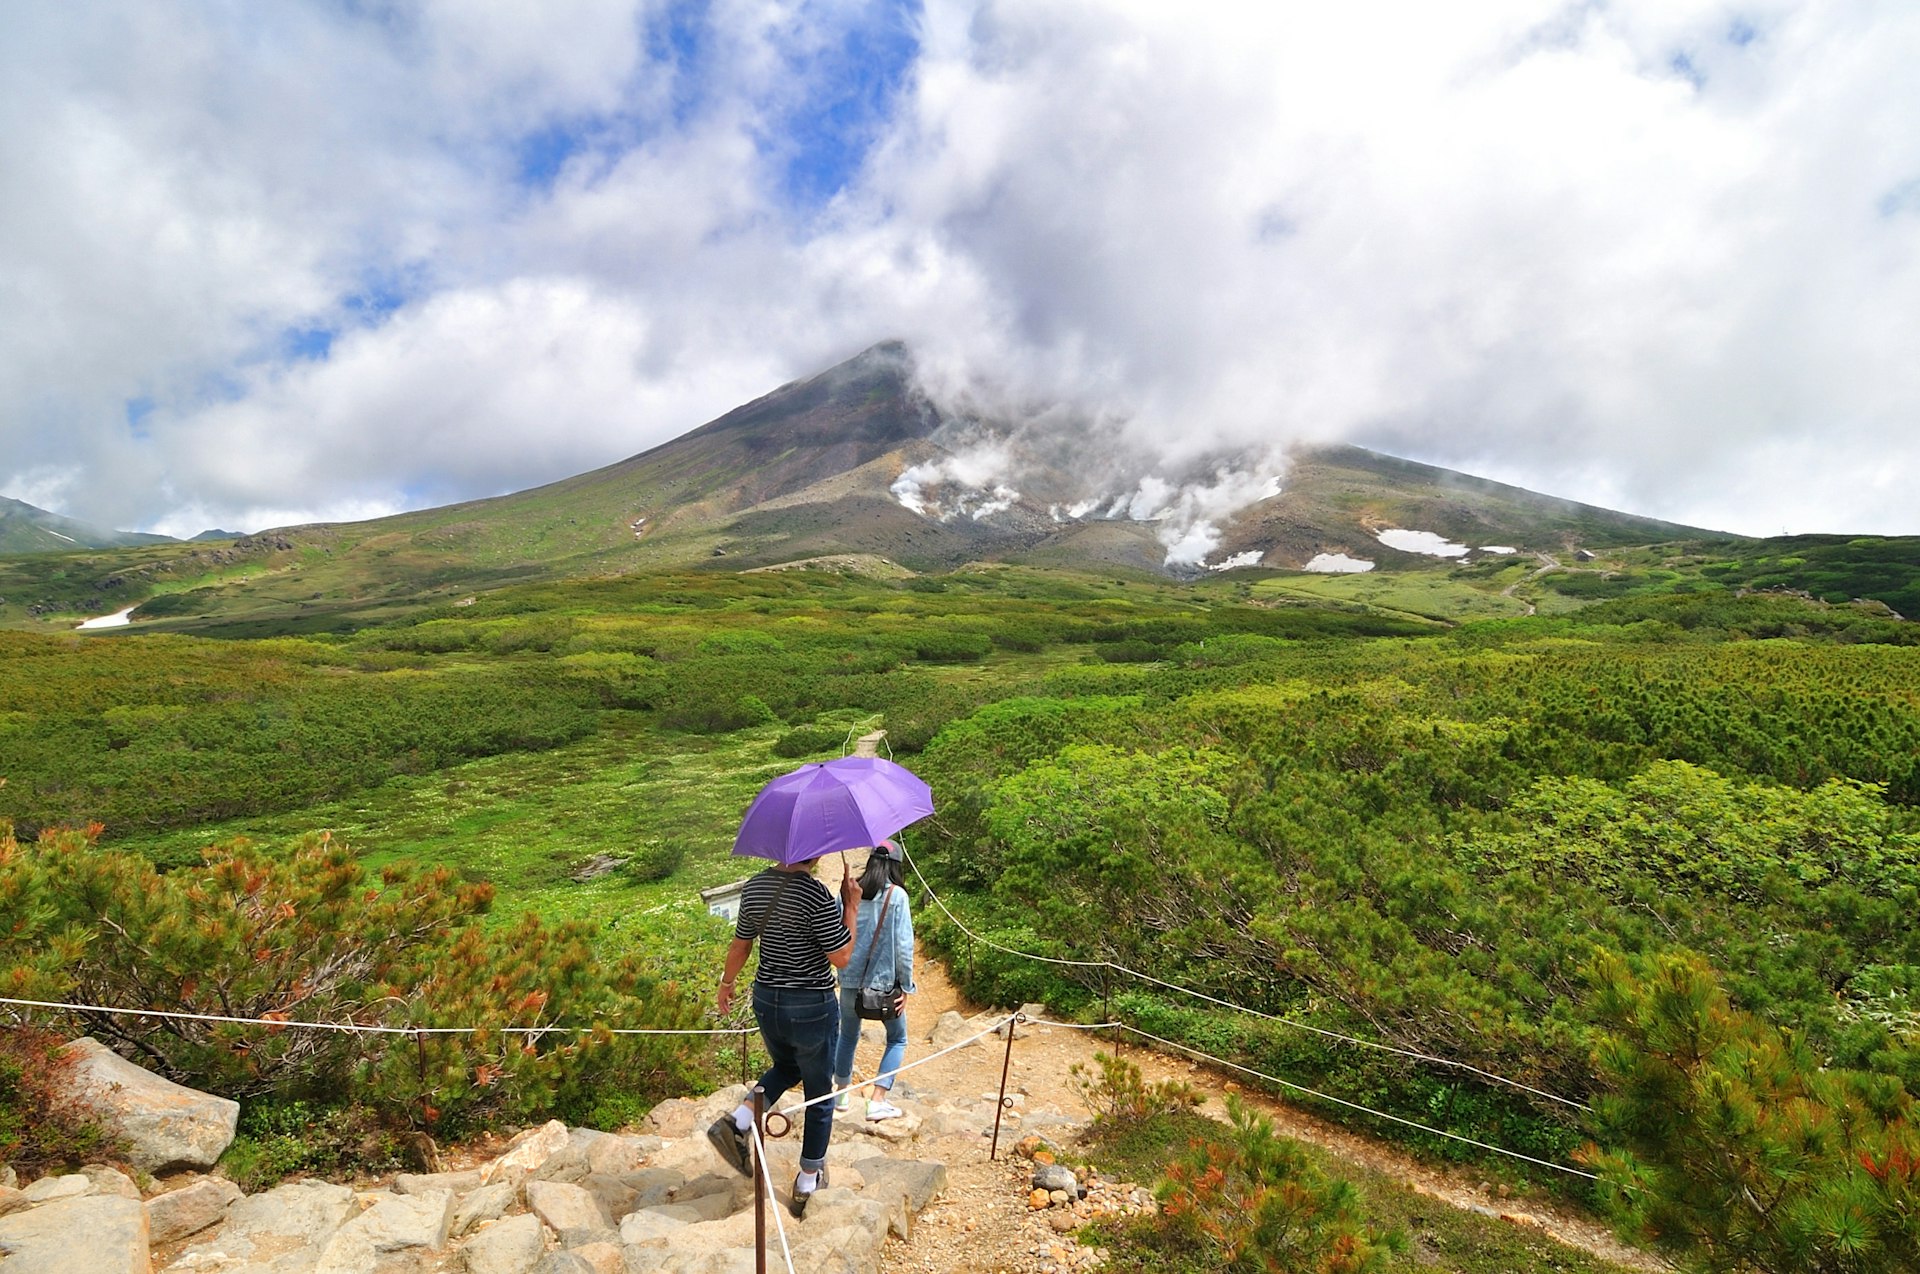 Hikers on the trail around the ropeway's upper station at Asahi-dake Mountain (Mt. Asahidake)